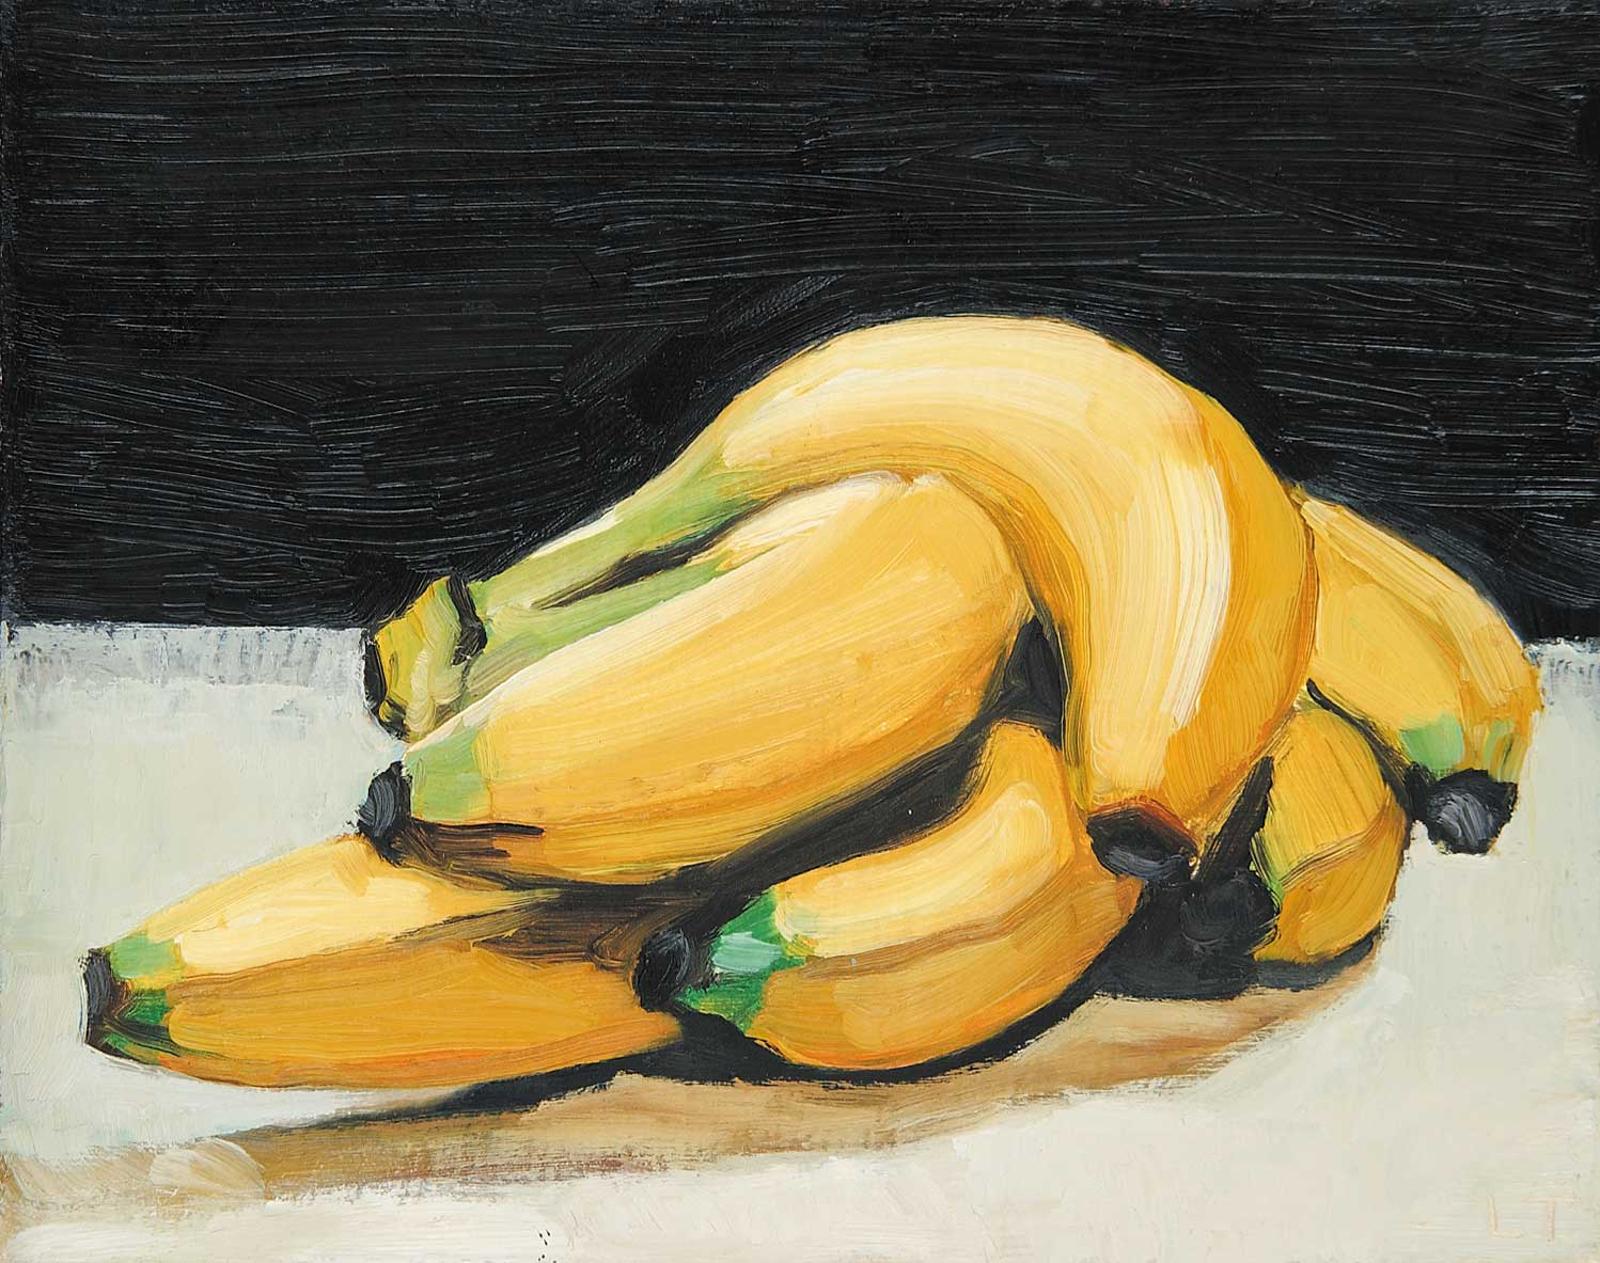 Les Thomas (1962) - Bananas